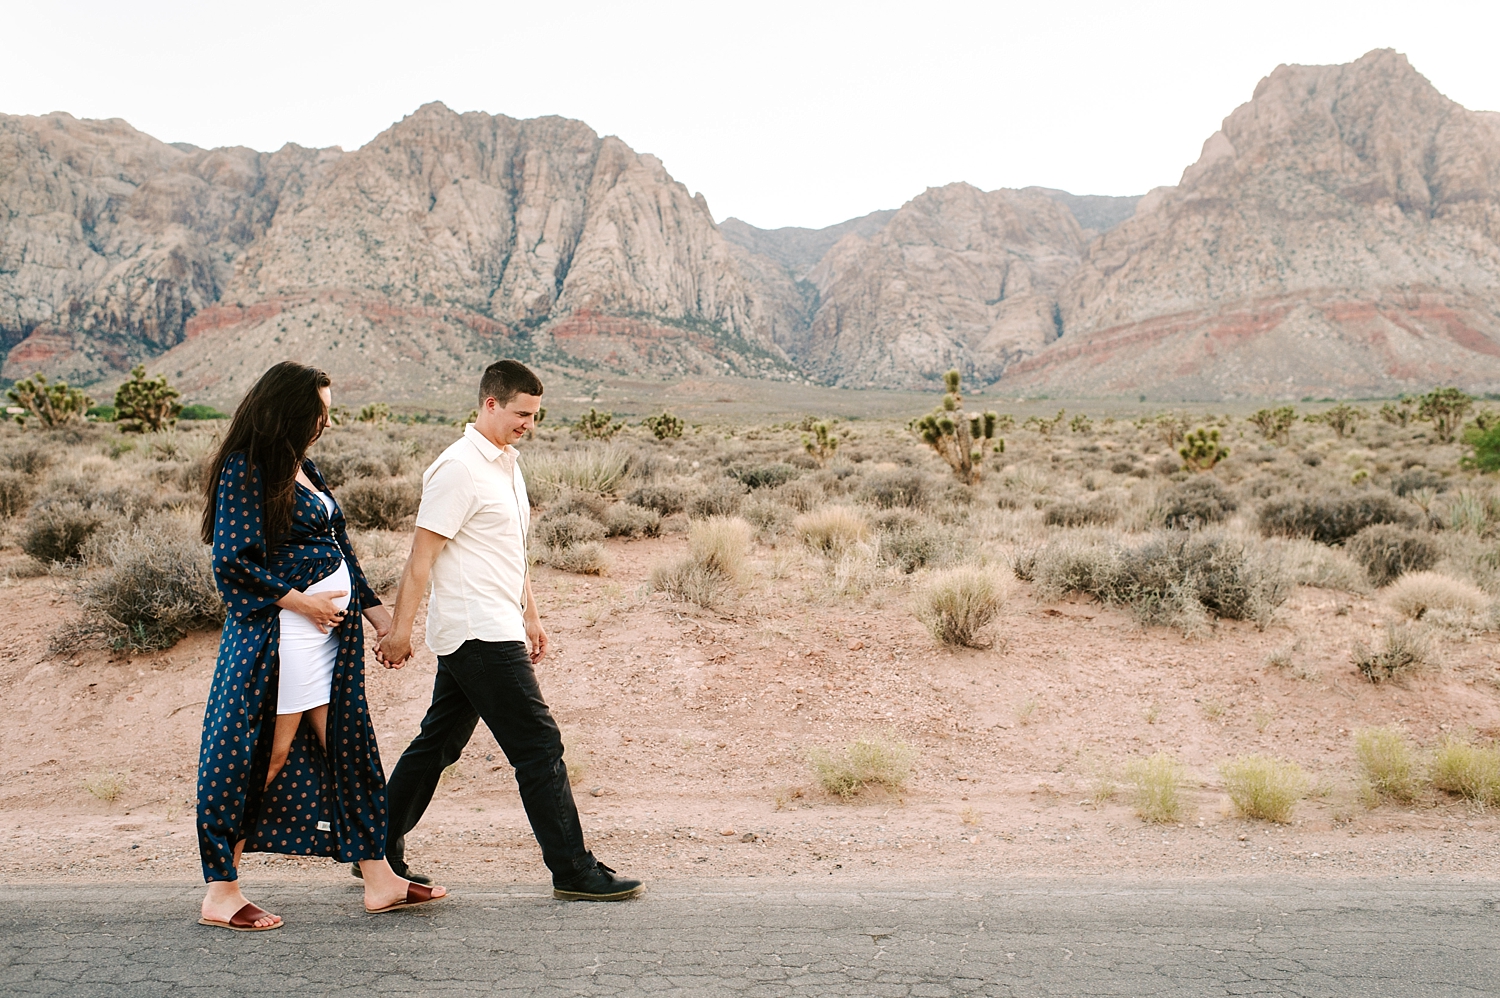 Couples maternity photoshoot in the Las Vegas desert with Meg Newton Photography 